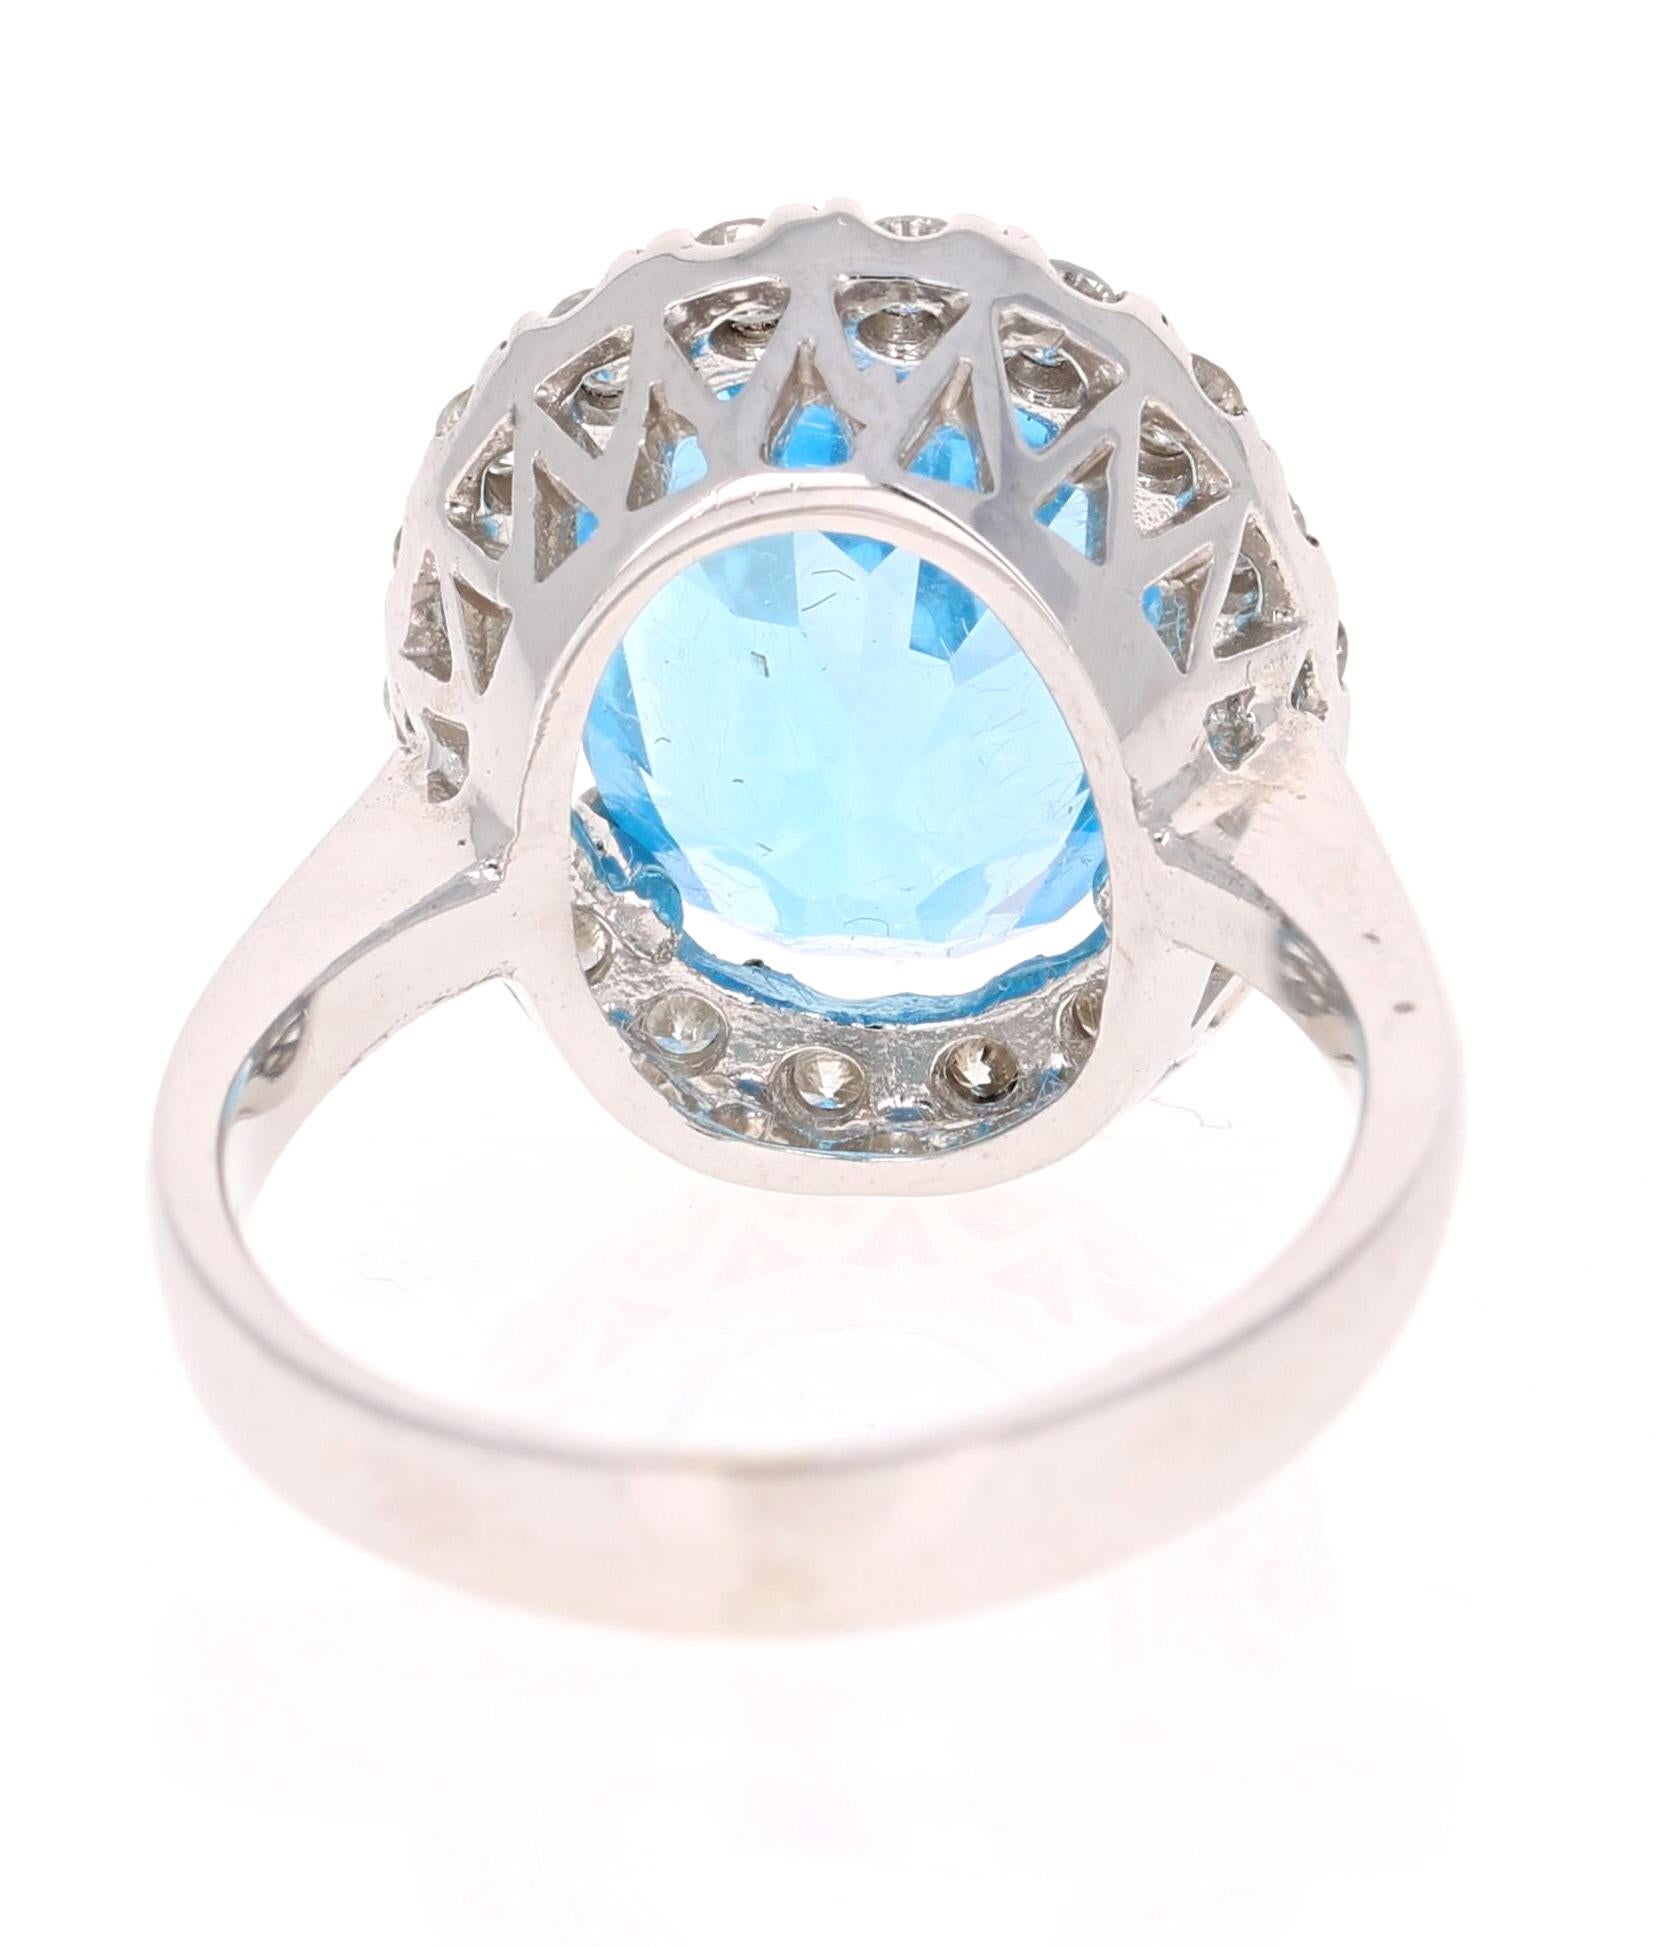 Oval Cut 7.72 Carat Blue Topaz Halo Diamond 4 Karat White Gold Ring For Sale